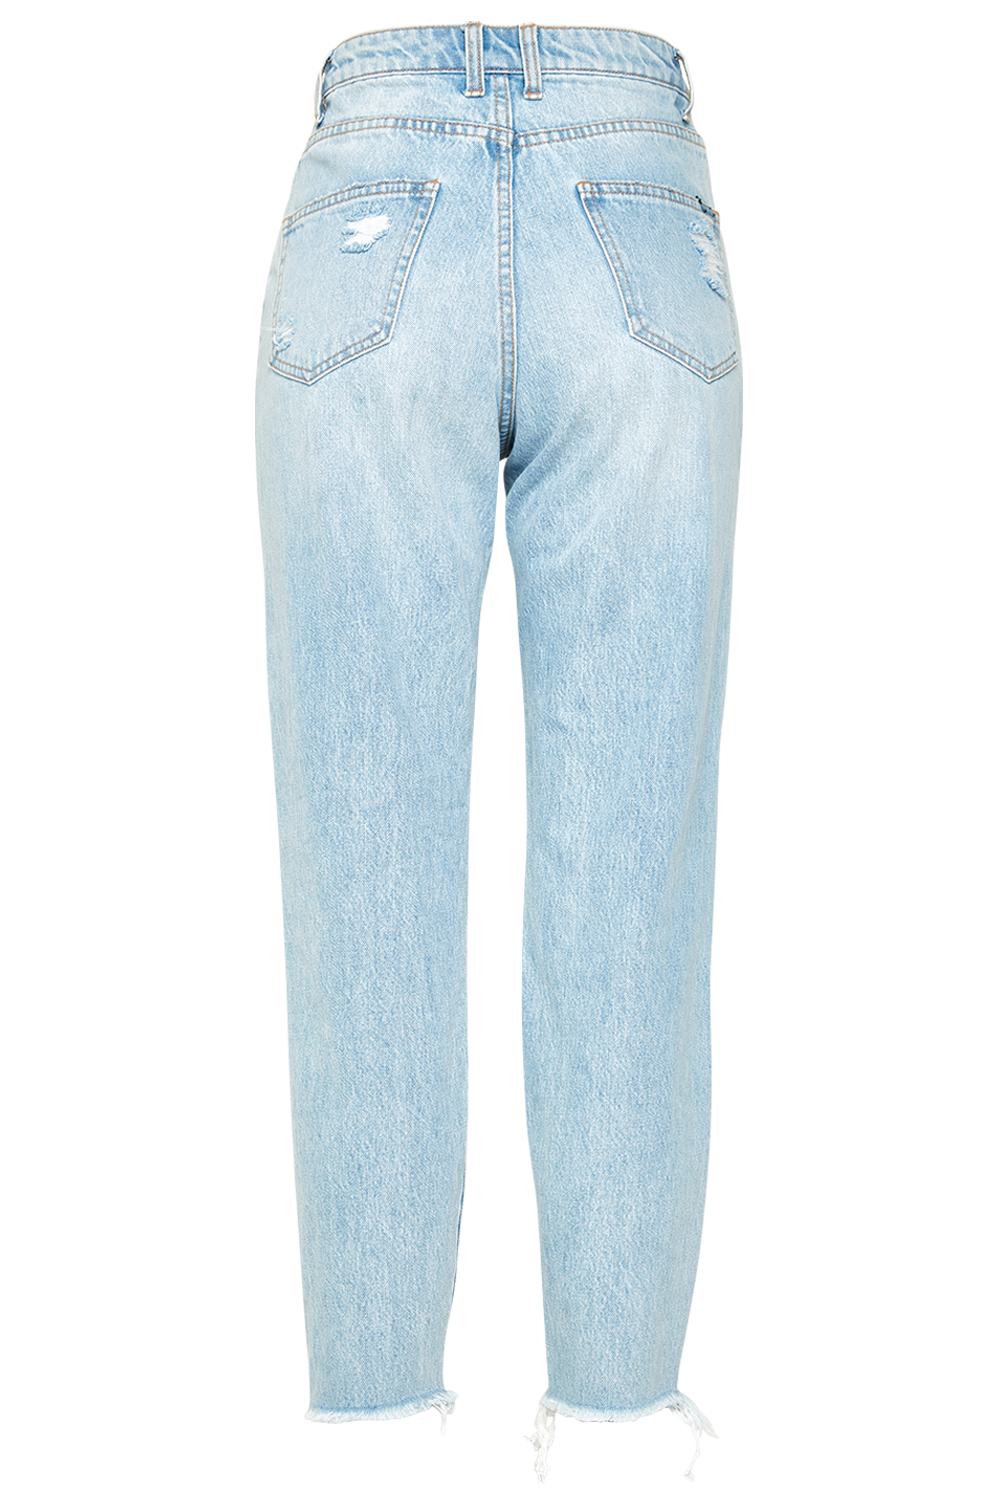 bardot mum jeans